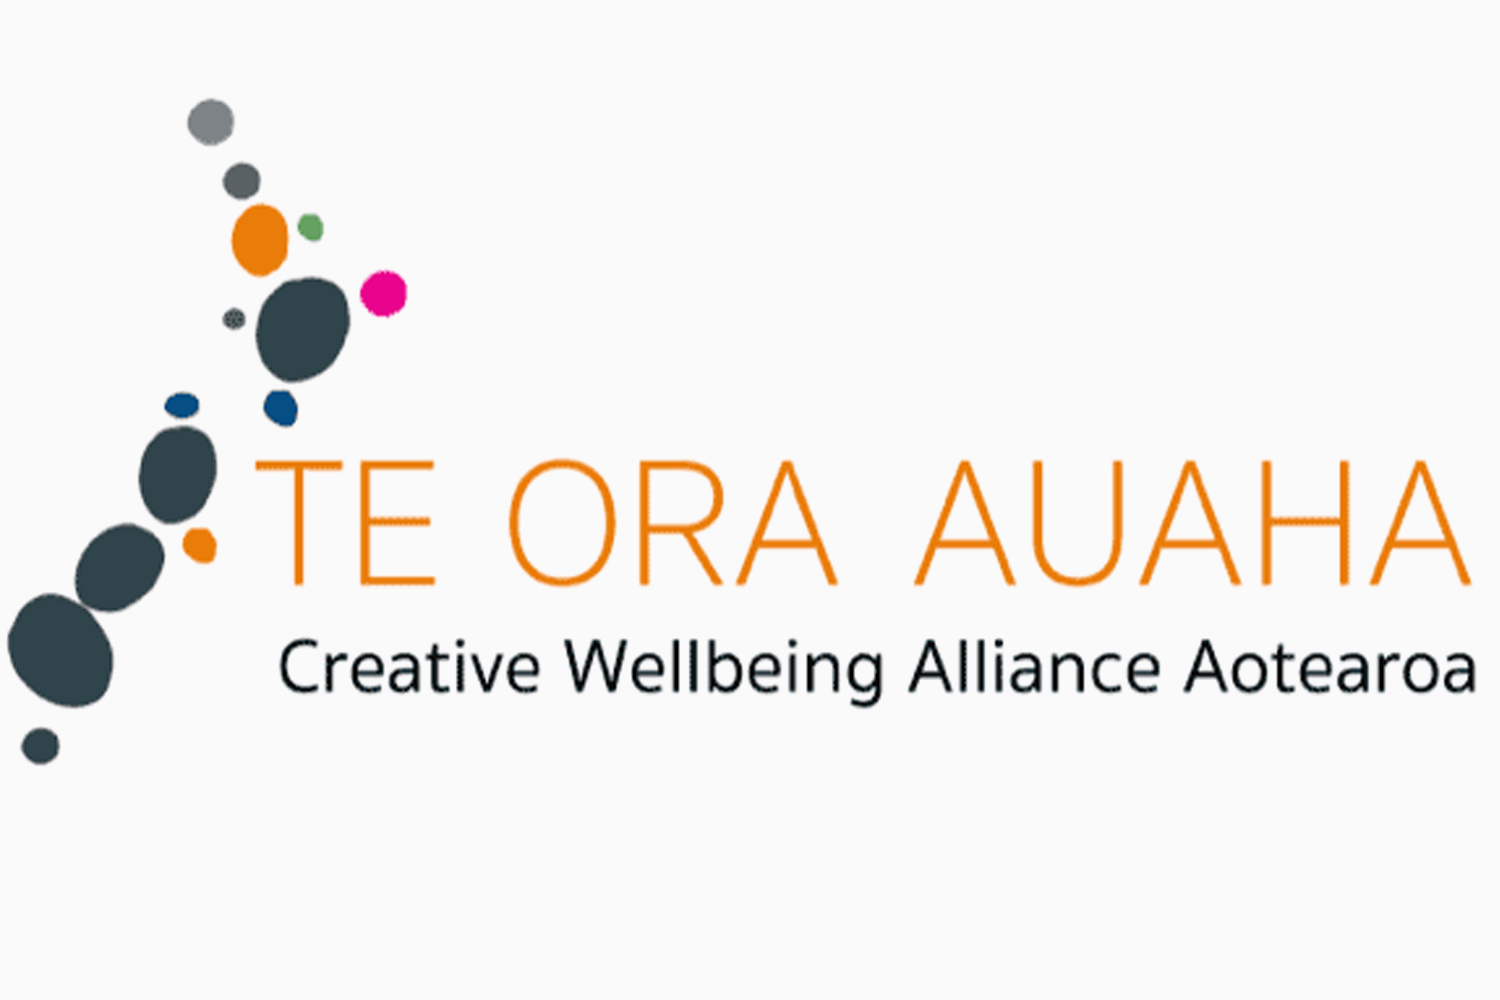 Te Ora Auhua, Creative Wellbeing Alliance Aoteroa. Creativewellbeingnz.org